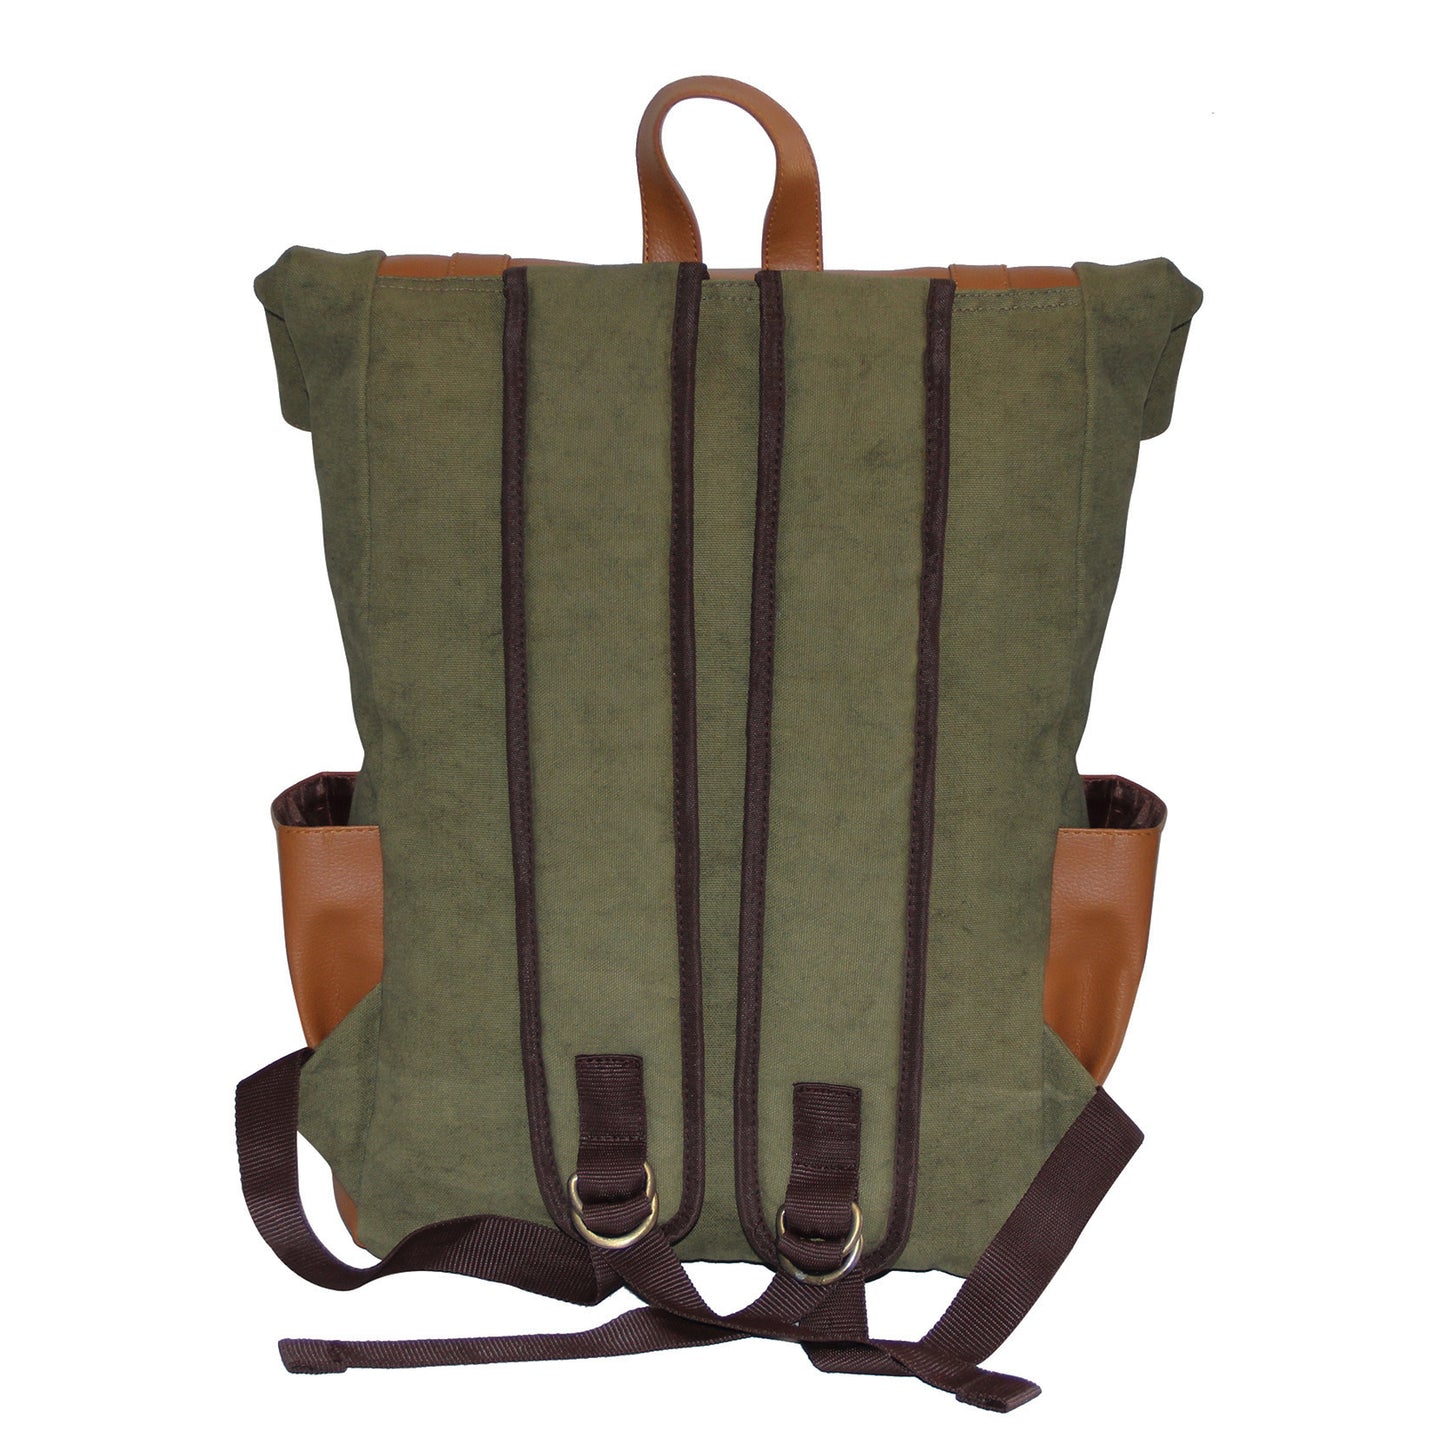 Olive Canvas Backpack